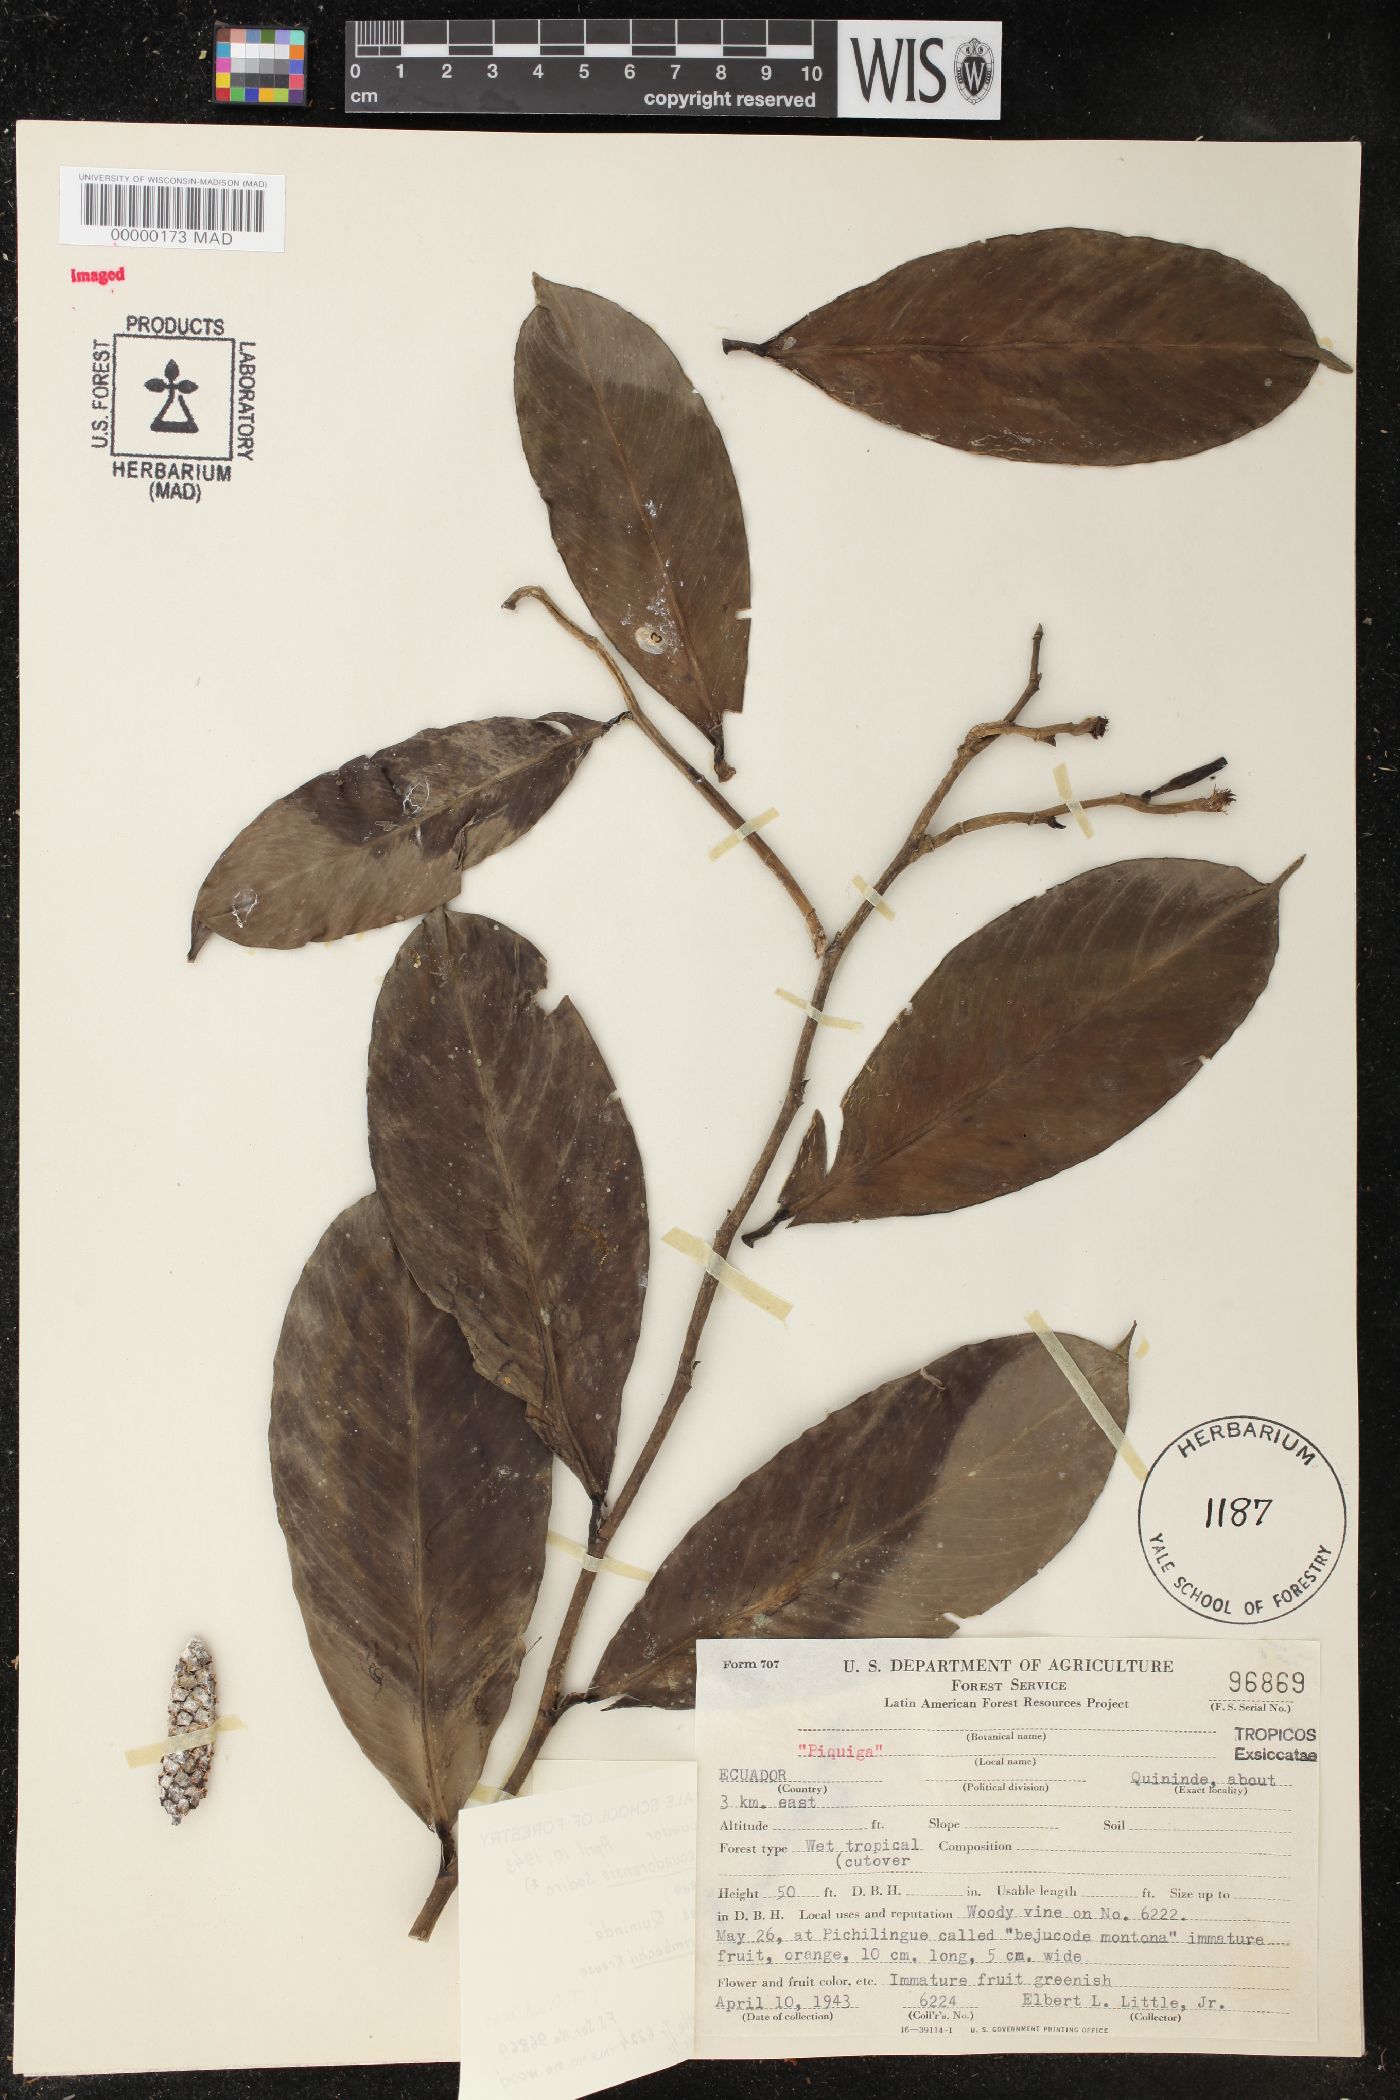 Heteropsis ecuadorensis image